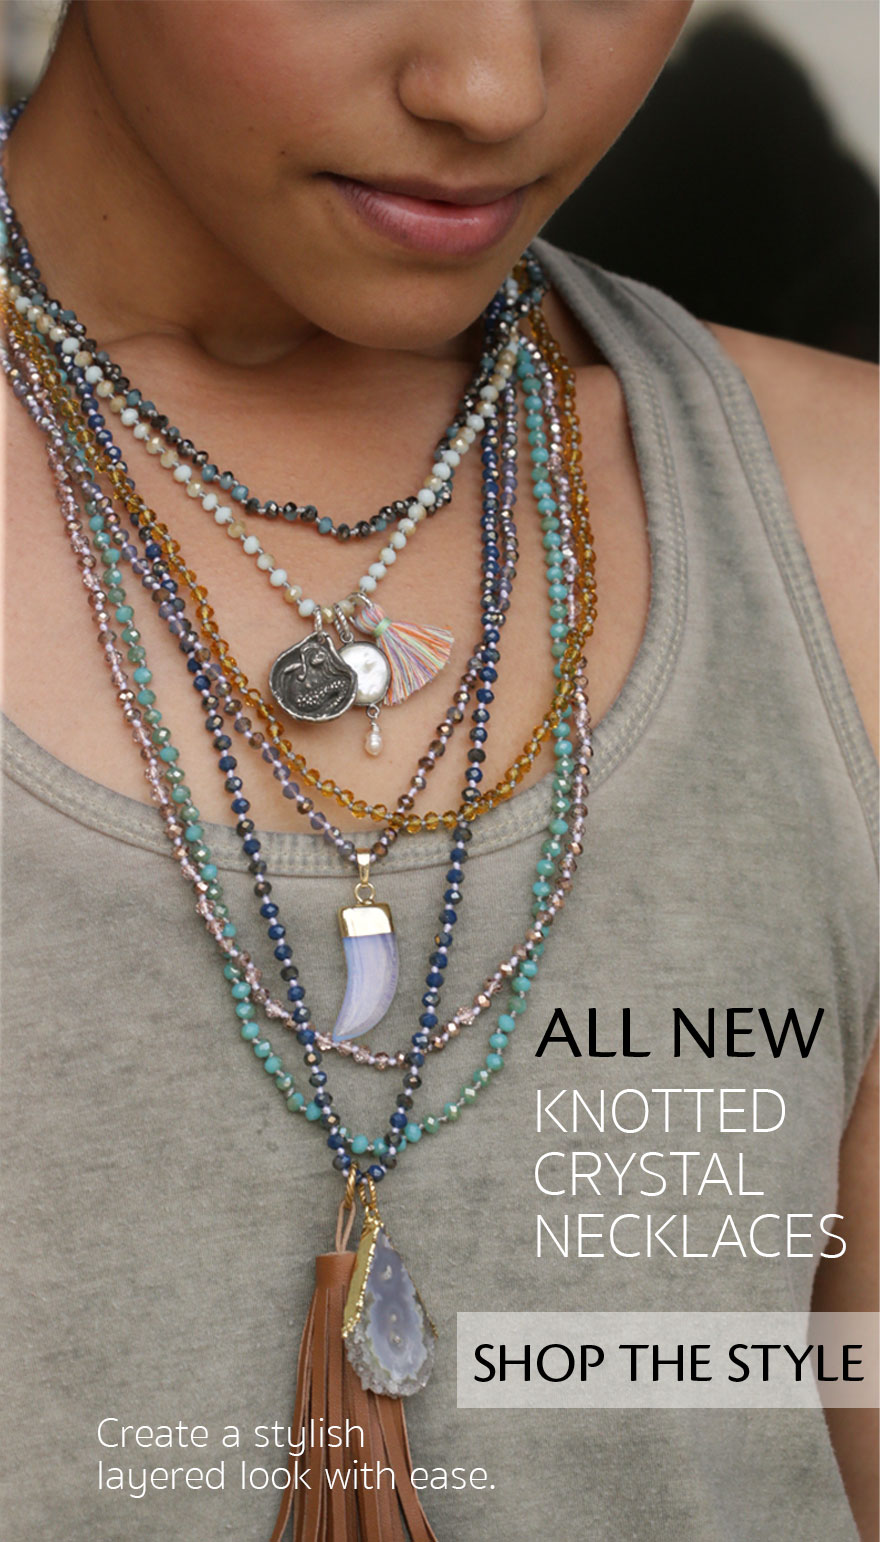 Lima Beads has Gemstone Beads, Metal, Czech Glass, CZ, Findings & Supplies!